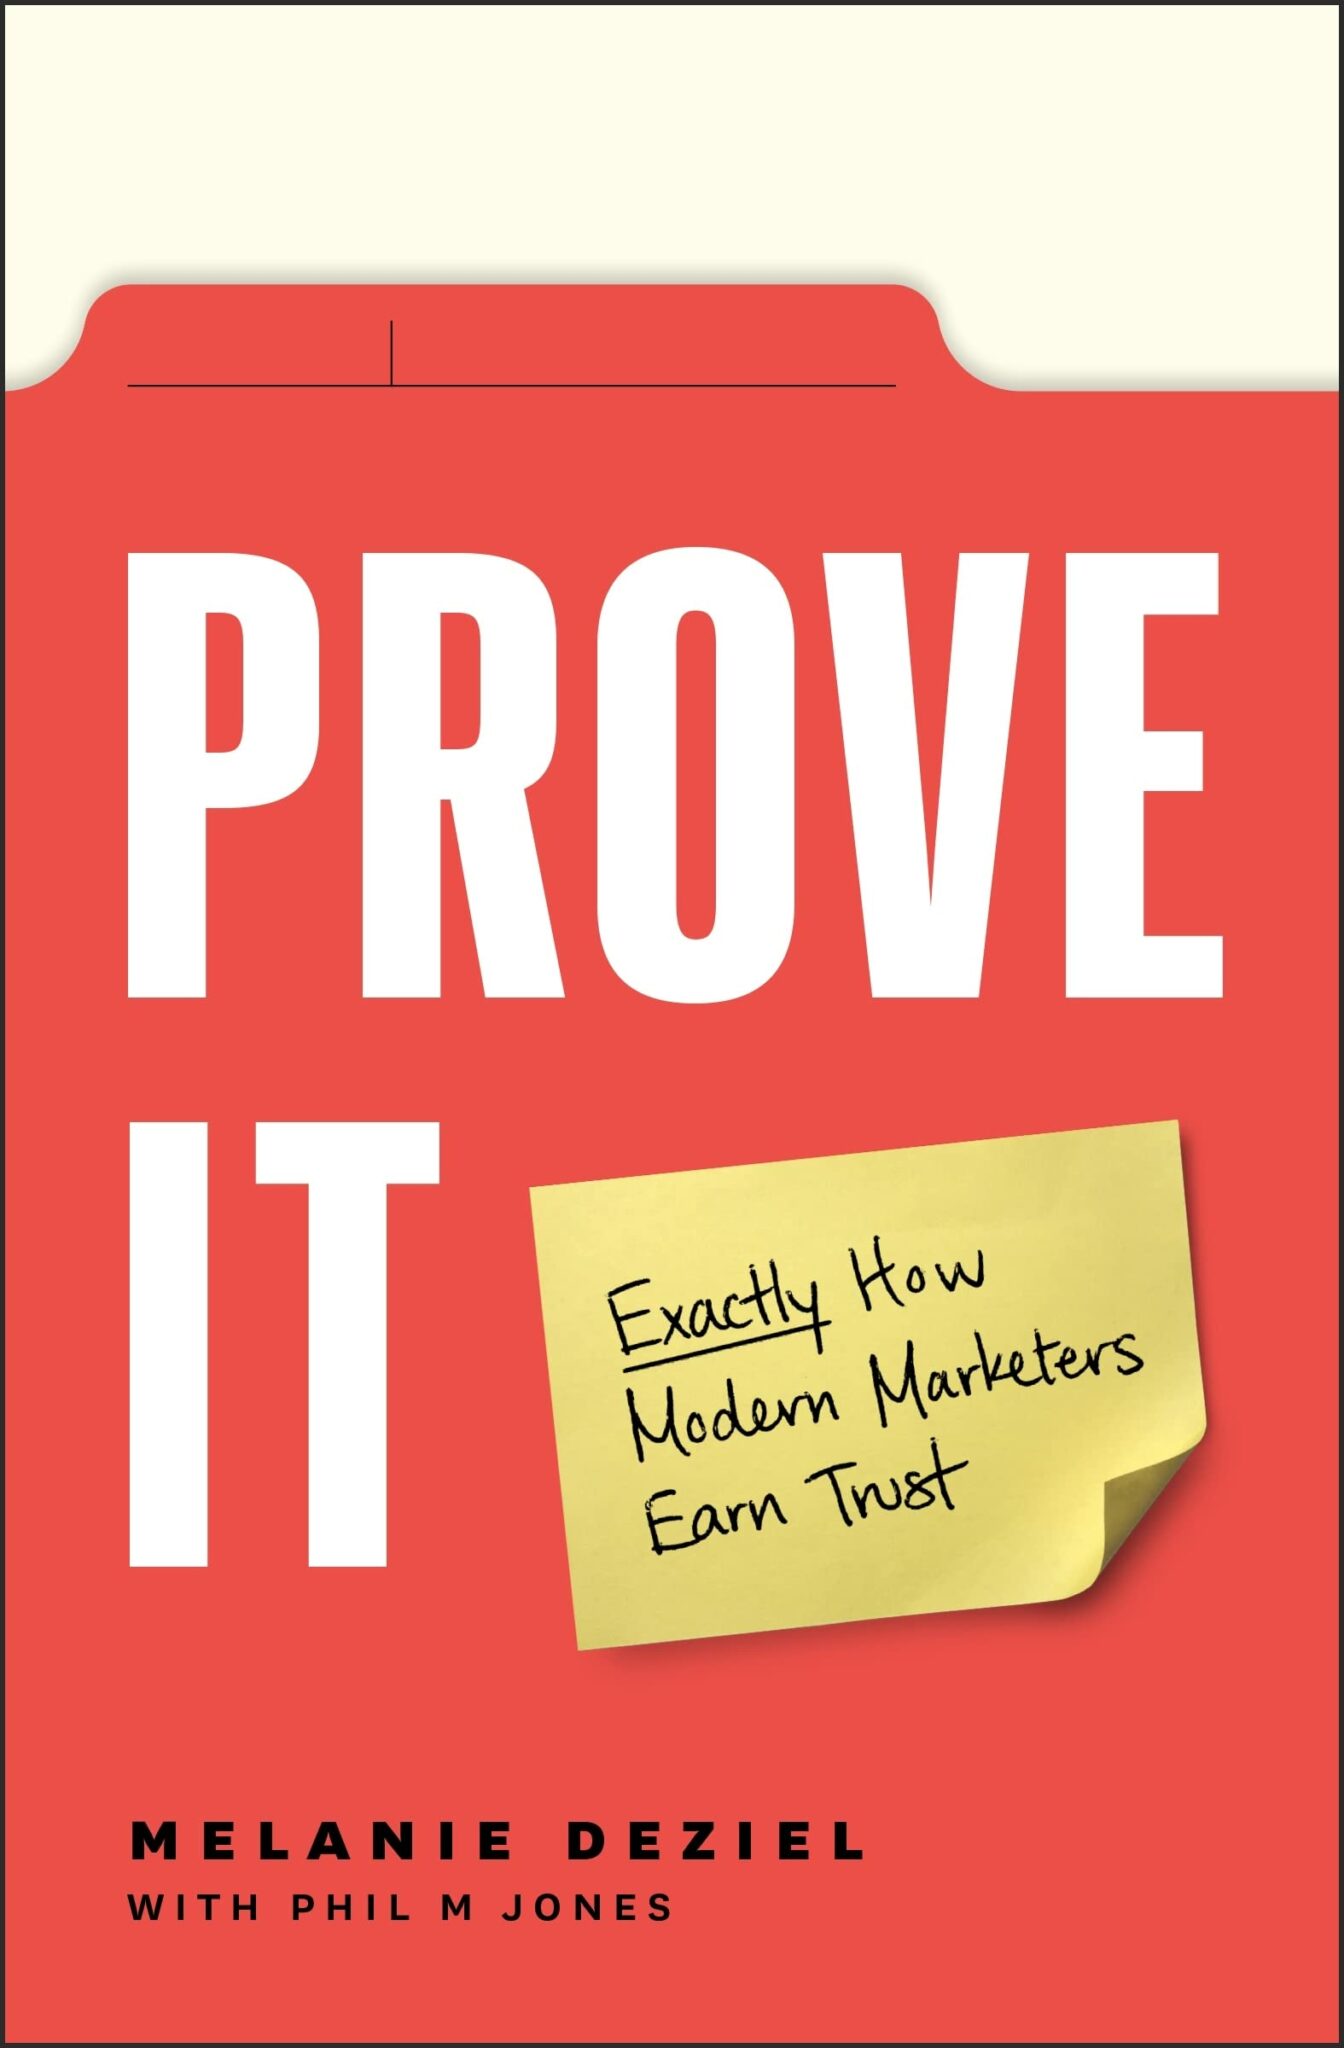 Bookcover of PROVE IT written by Melanie Deziel